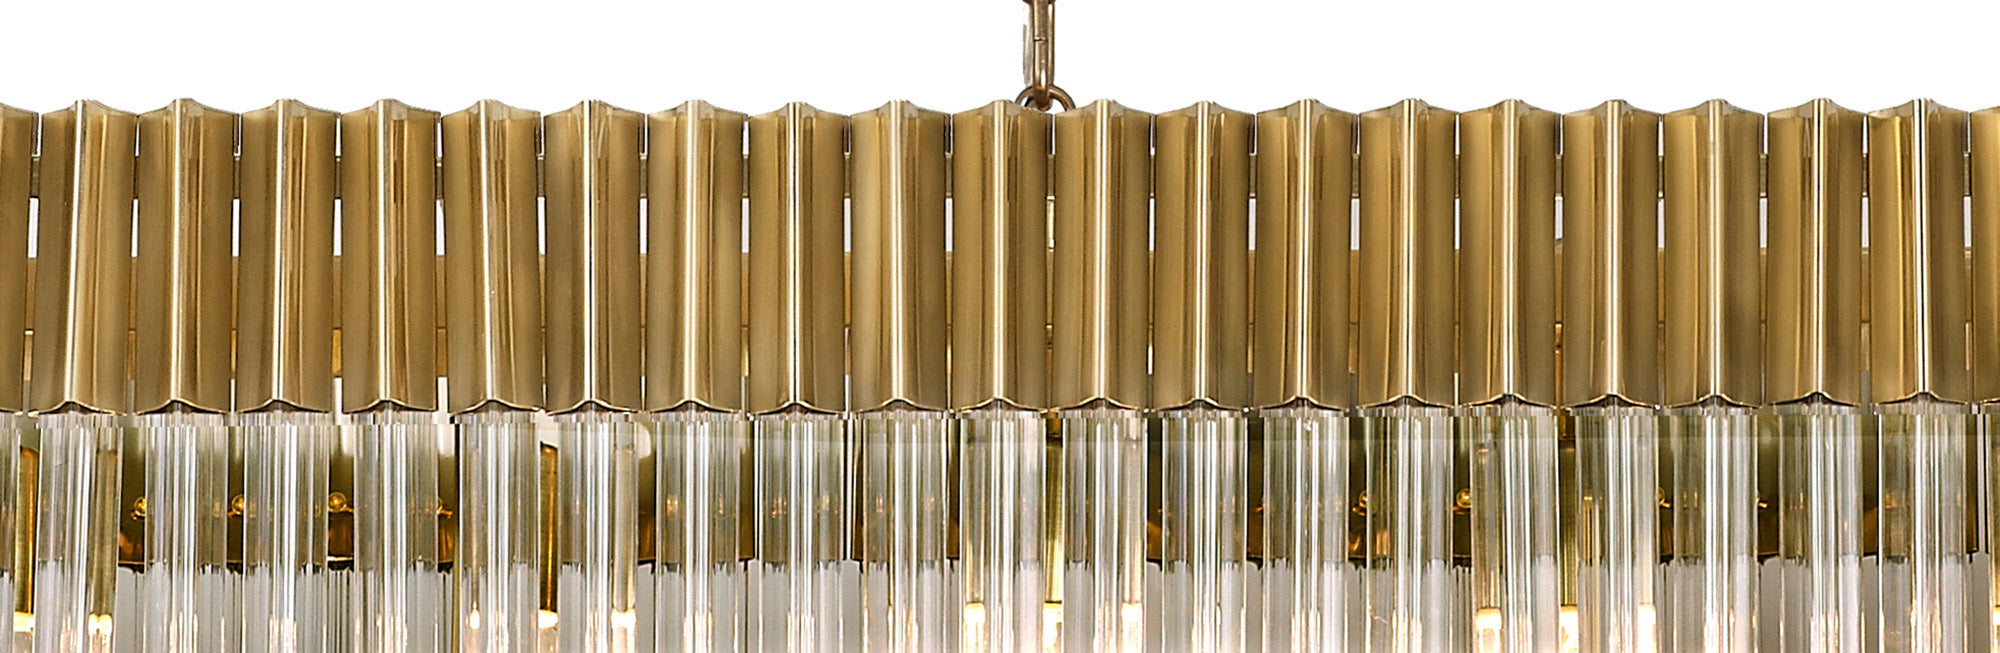 Knightsbridge Pendant Rectangle 7 Light E14, Brass/Clear Glass - LO182343. Item Weight: 28kg